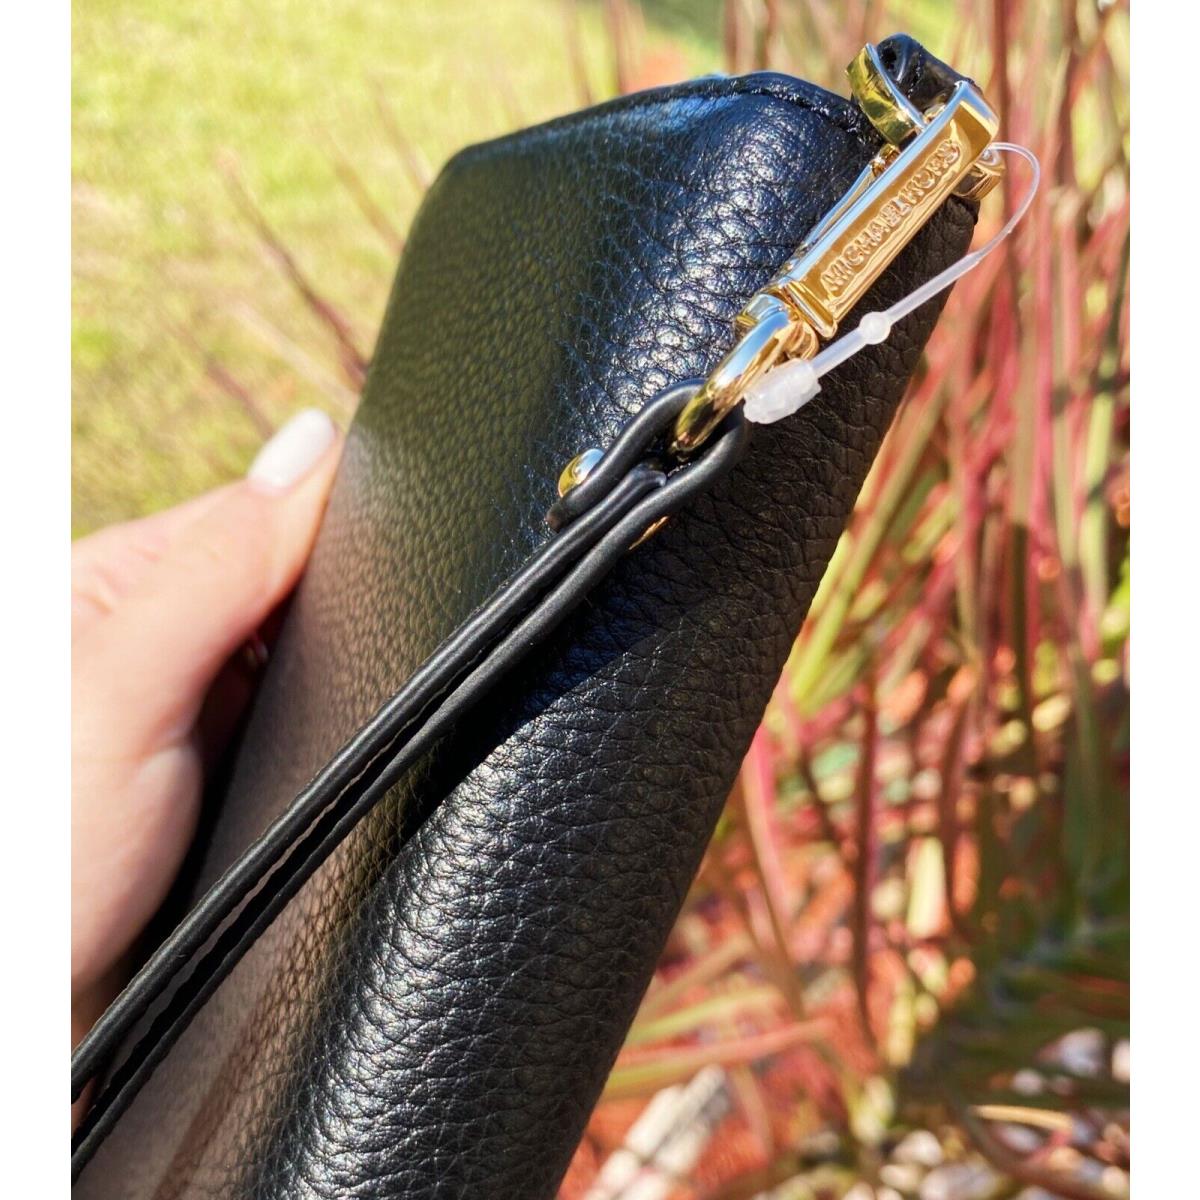 Michael Kors Jet Set Travel Large Flat Zip MF Phone Case Wristlet Wallet  Black - Michael Kors wallet - 192877339588 | Fash Brands